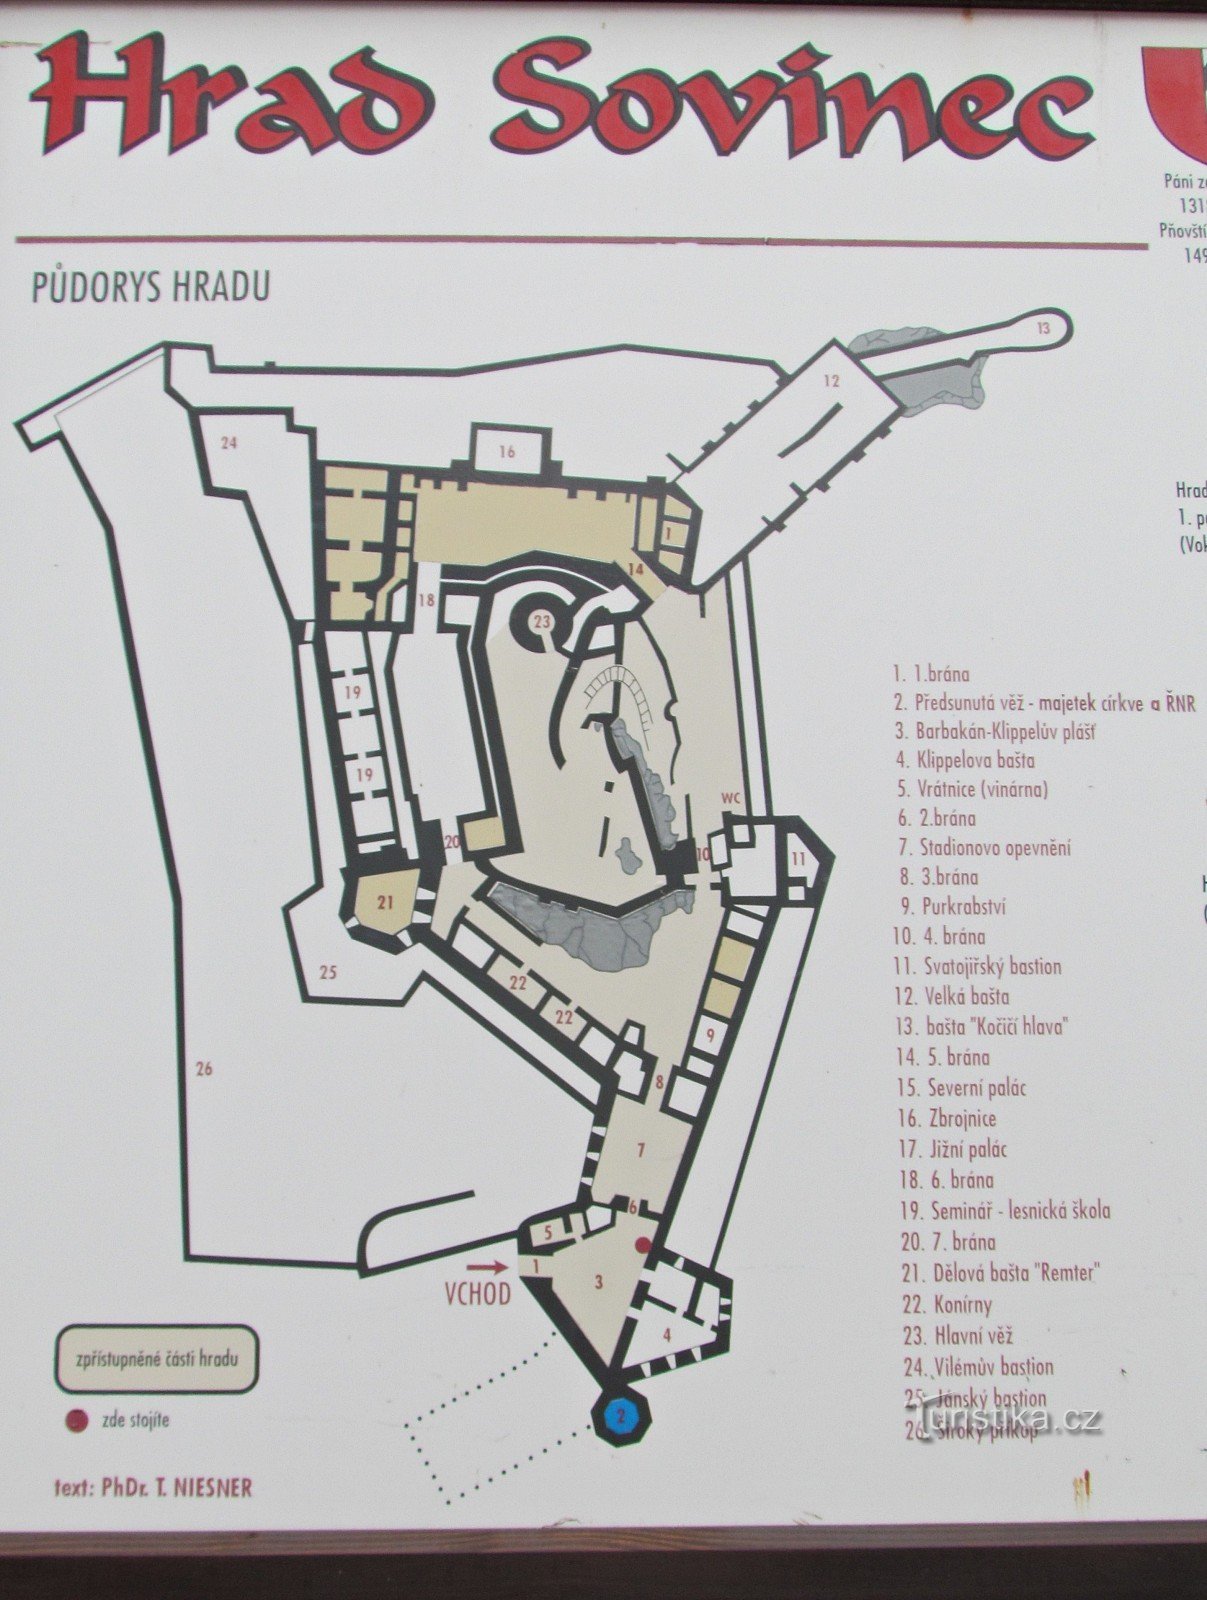 Dvorac Sovinec - Mačji bastion